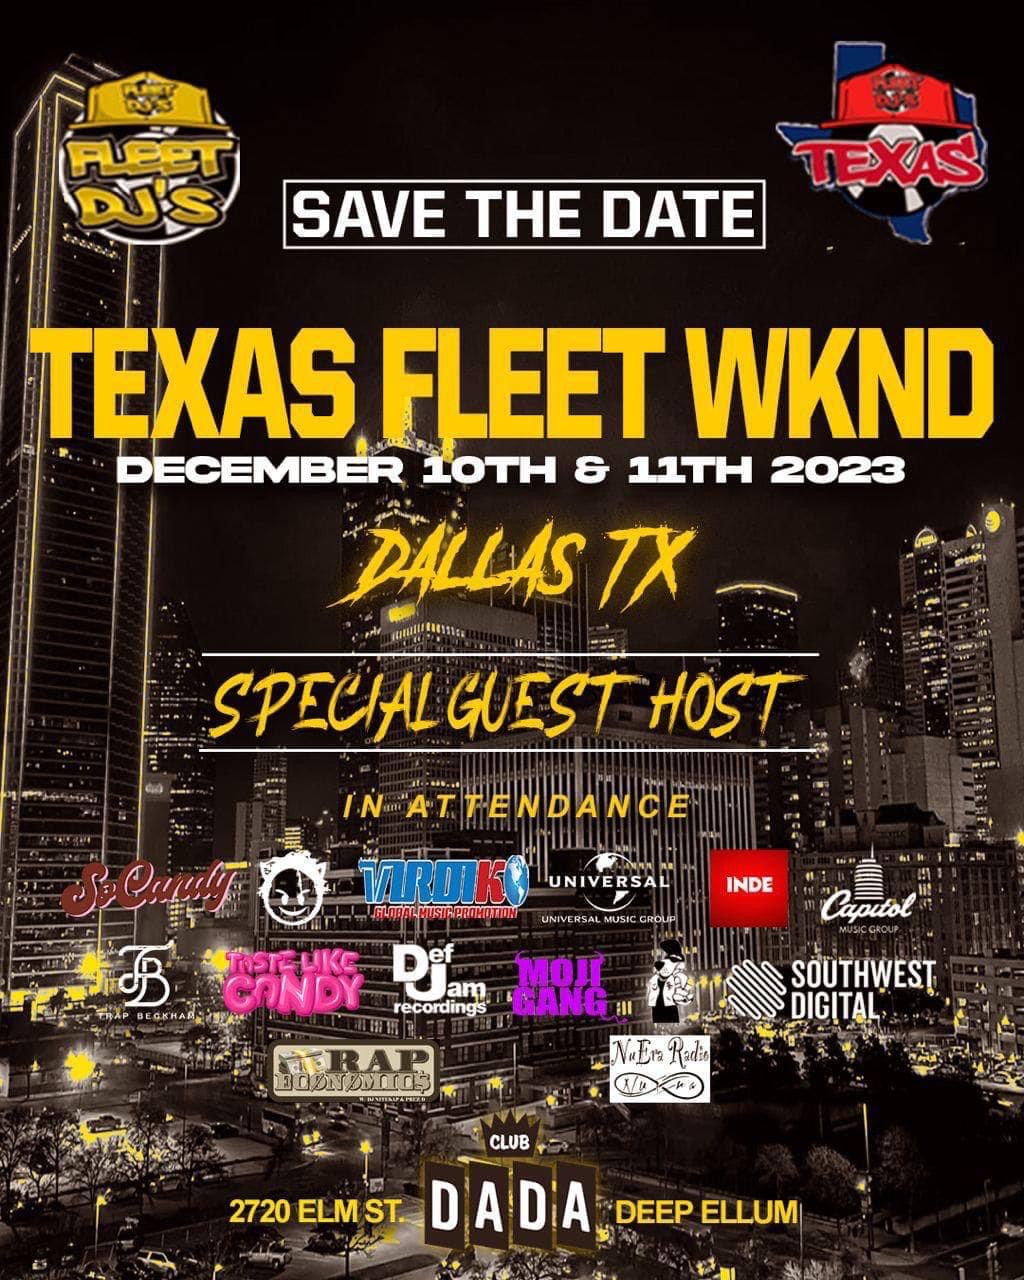 #Fleet DJs #Texas, Texas, Fleet Djs, #AccessUnlocked, Access Unlocked